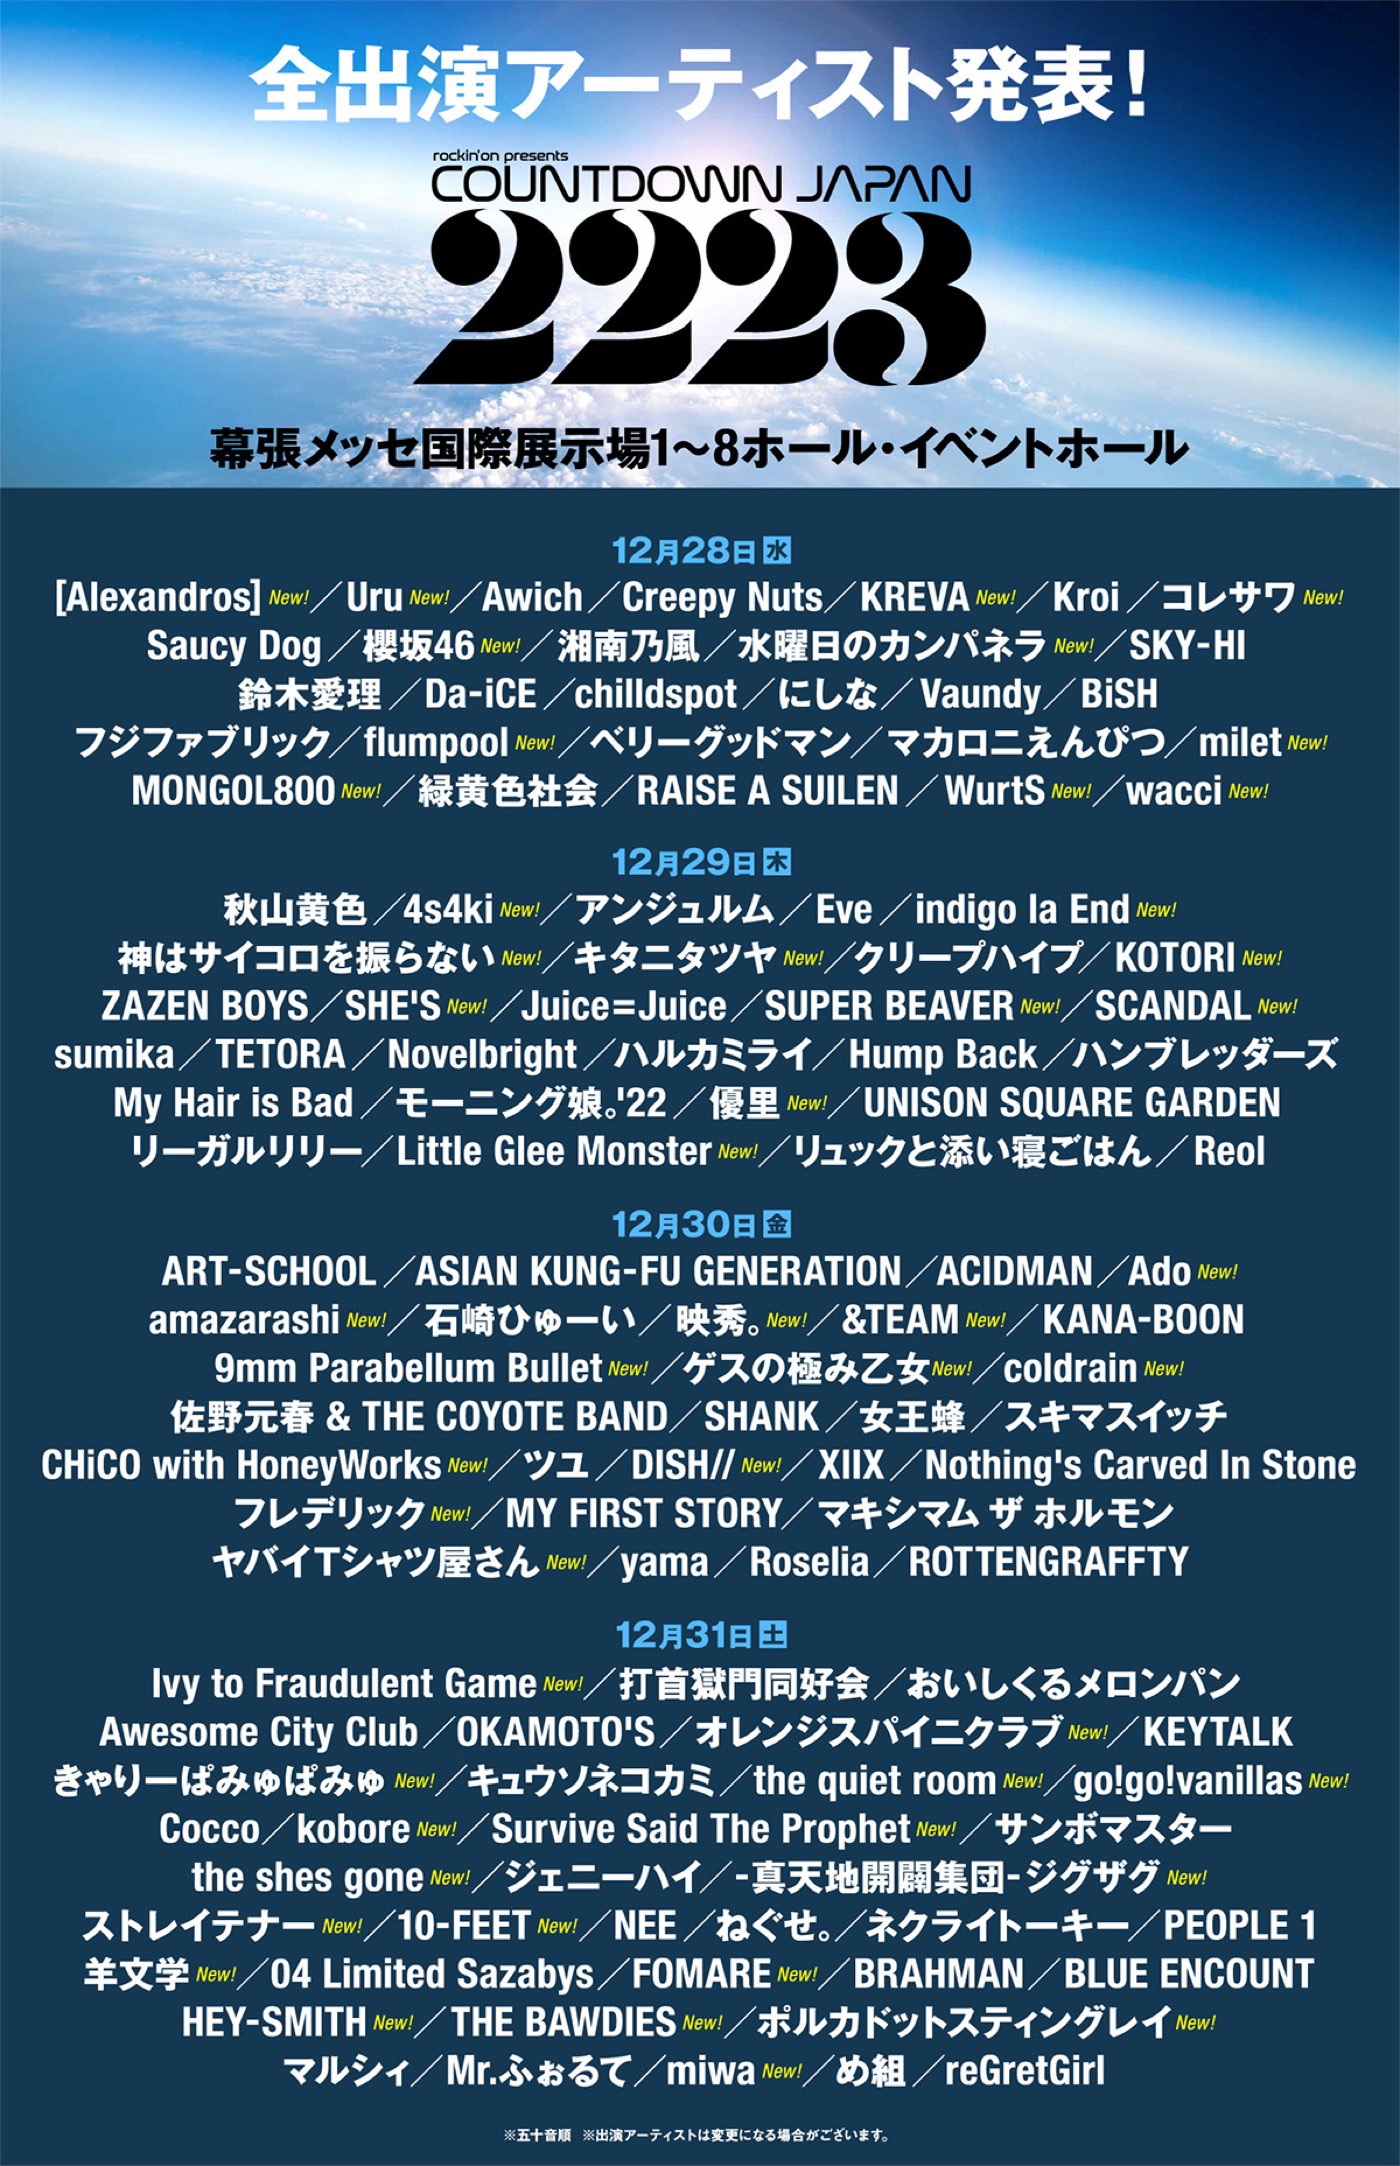 『COUNTDOWN JAPAN 22/23』総勢121組の出演アーティストが決定。チケット第3次抽選先行受付もスタート - 画像一覧（1/2）